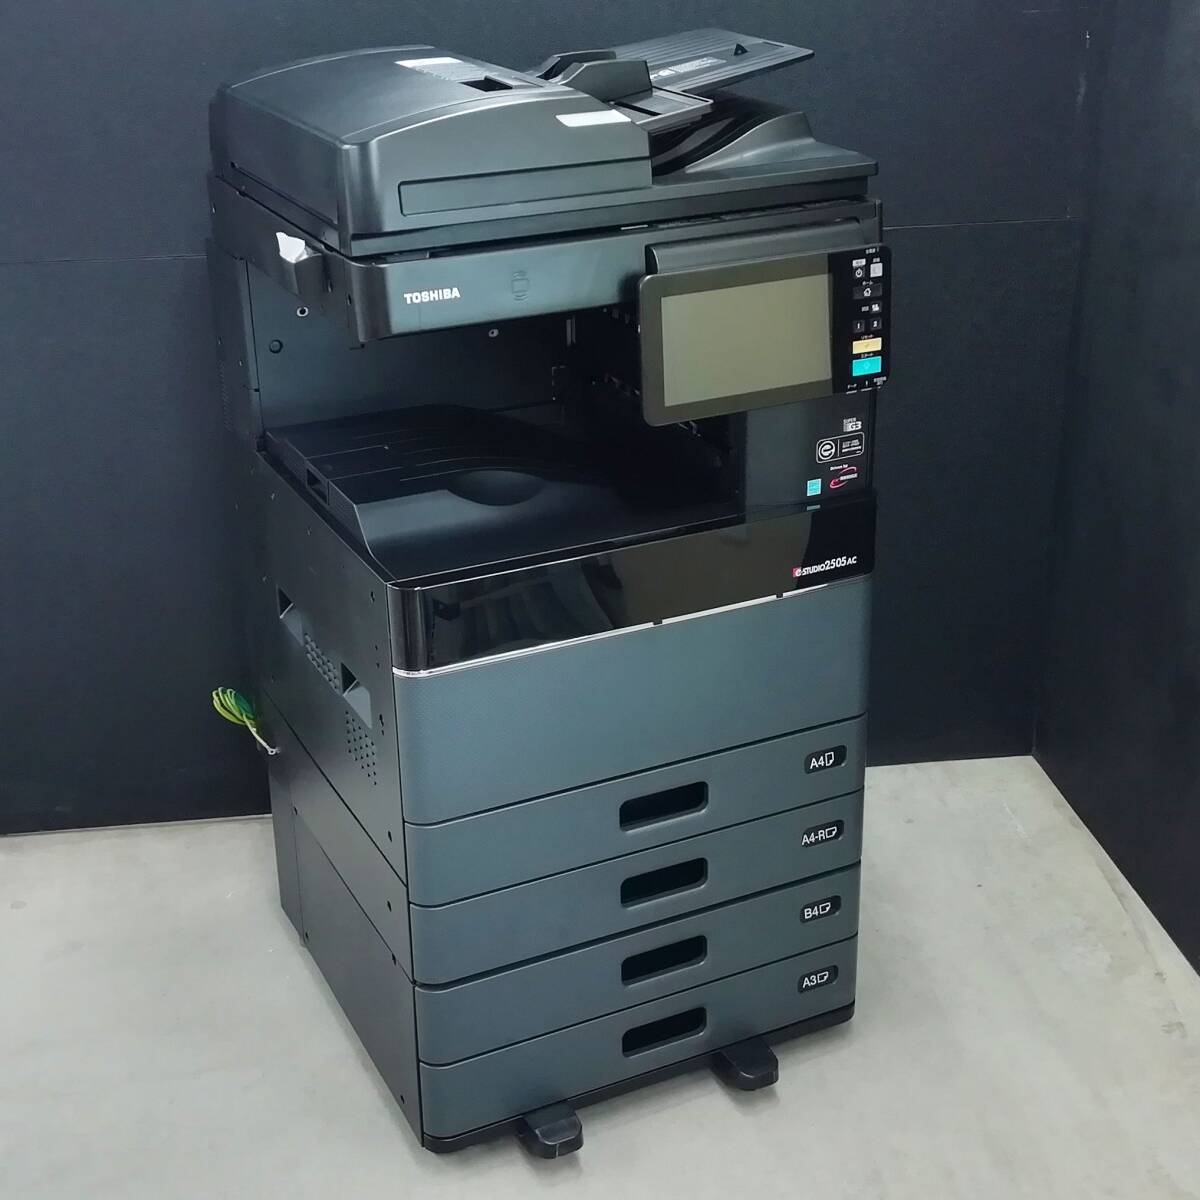 TOSHIBA/東芝 A3 カラー コピー機 複合機 e-STUDIO 2505AC 両面印刷OK コピー/スキャン/プリンター ADF有り 中古トナー付【H24041615】の画像1